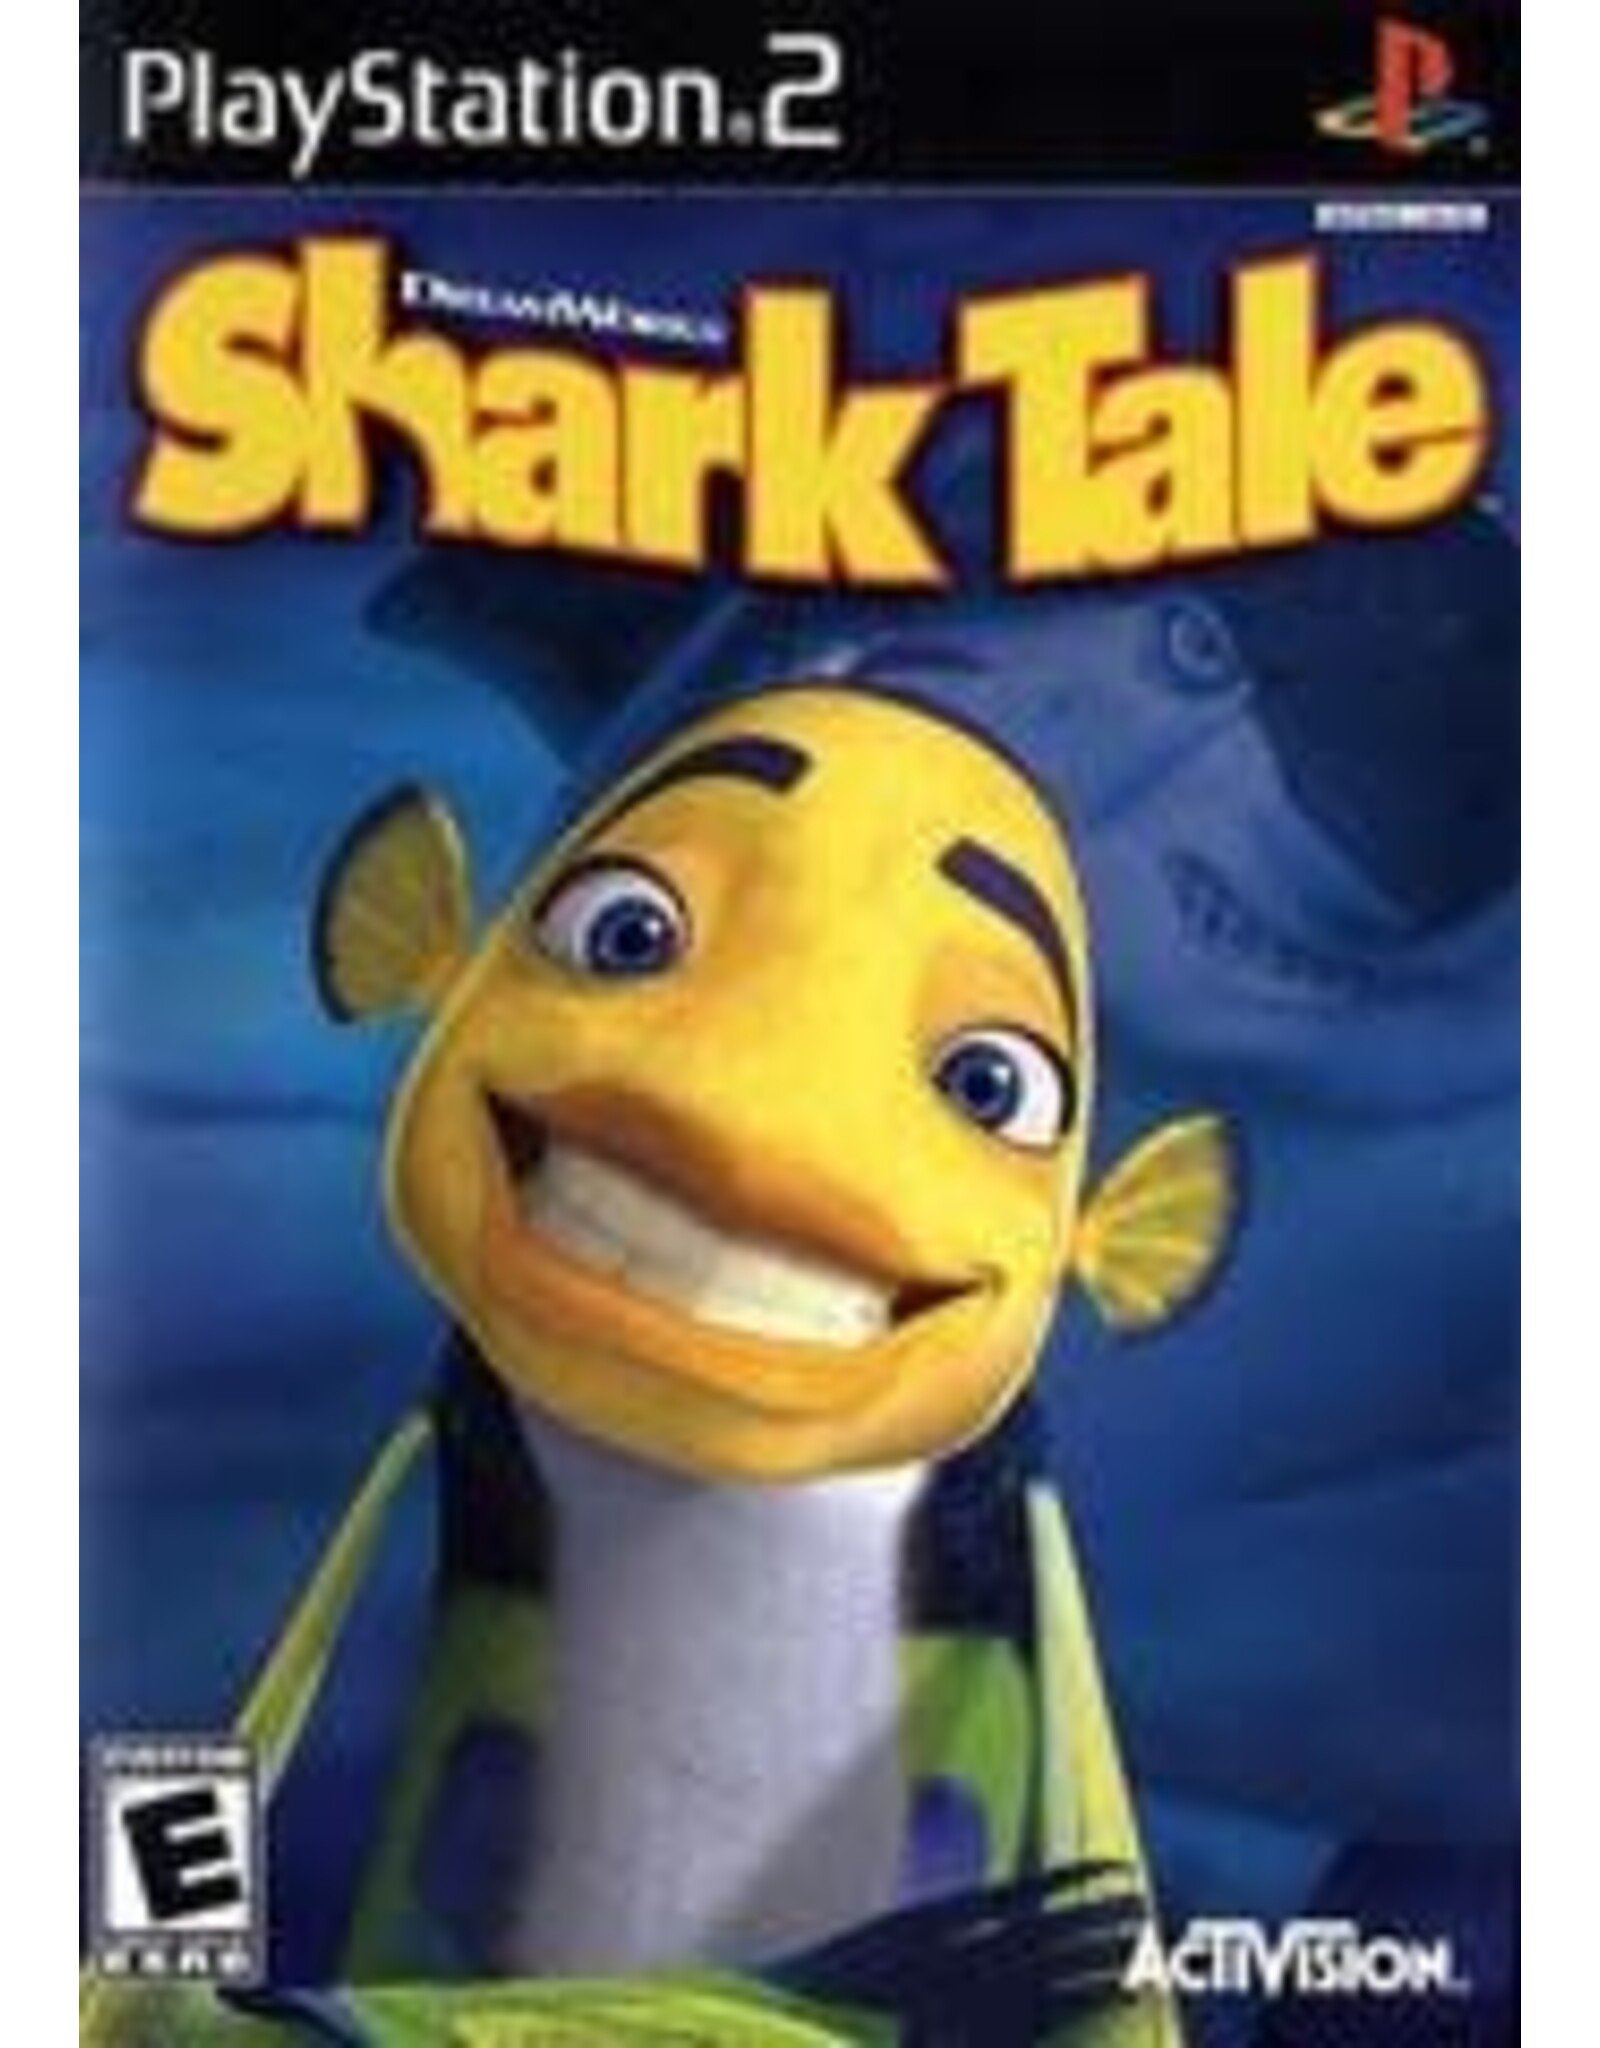 Playstation 2 Shark Tale (CiB, Damaged Sleeve)